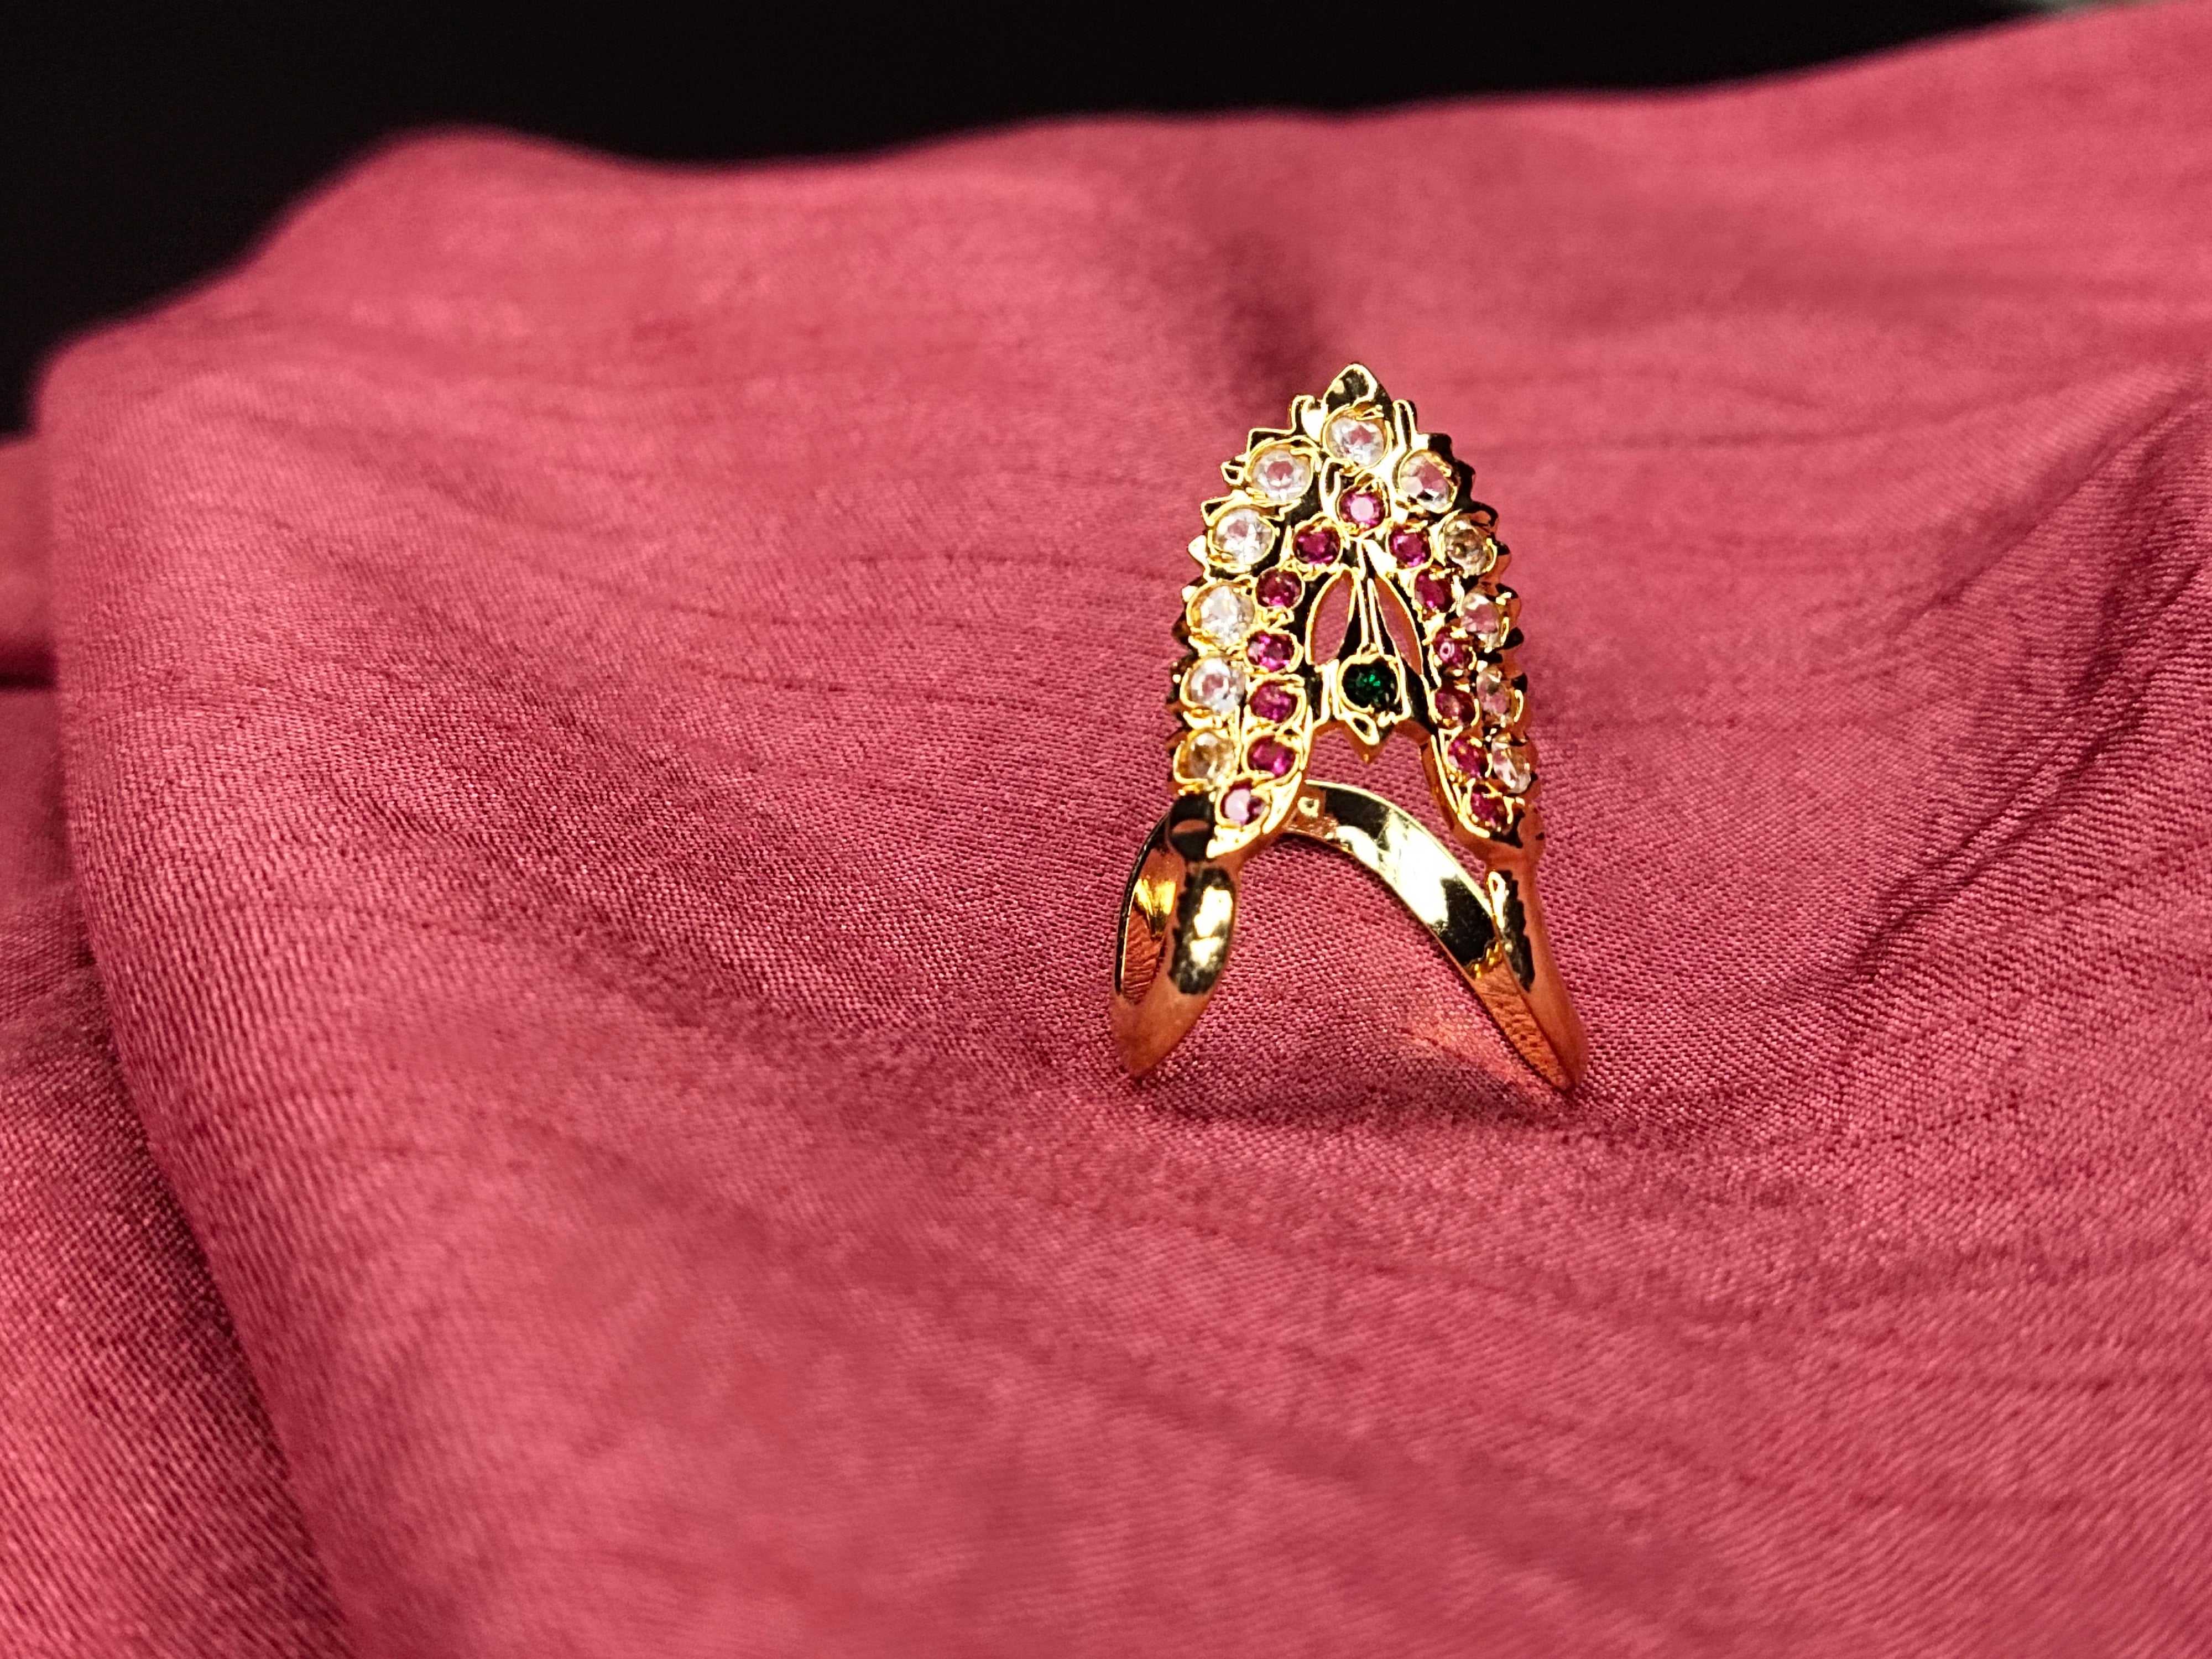 Gold prathama vanki rings design ♥️ . Like and follow 🤩 . Watch here 👇  https://youtu.be/JTxgmsyc004 . #vanki #goldvankidesigns #goldvanki #… |  Instagram